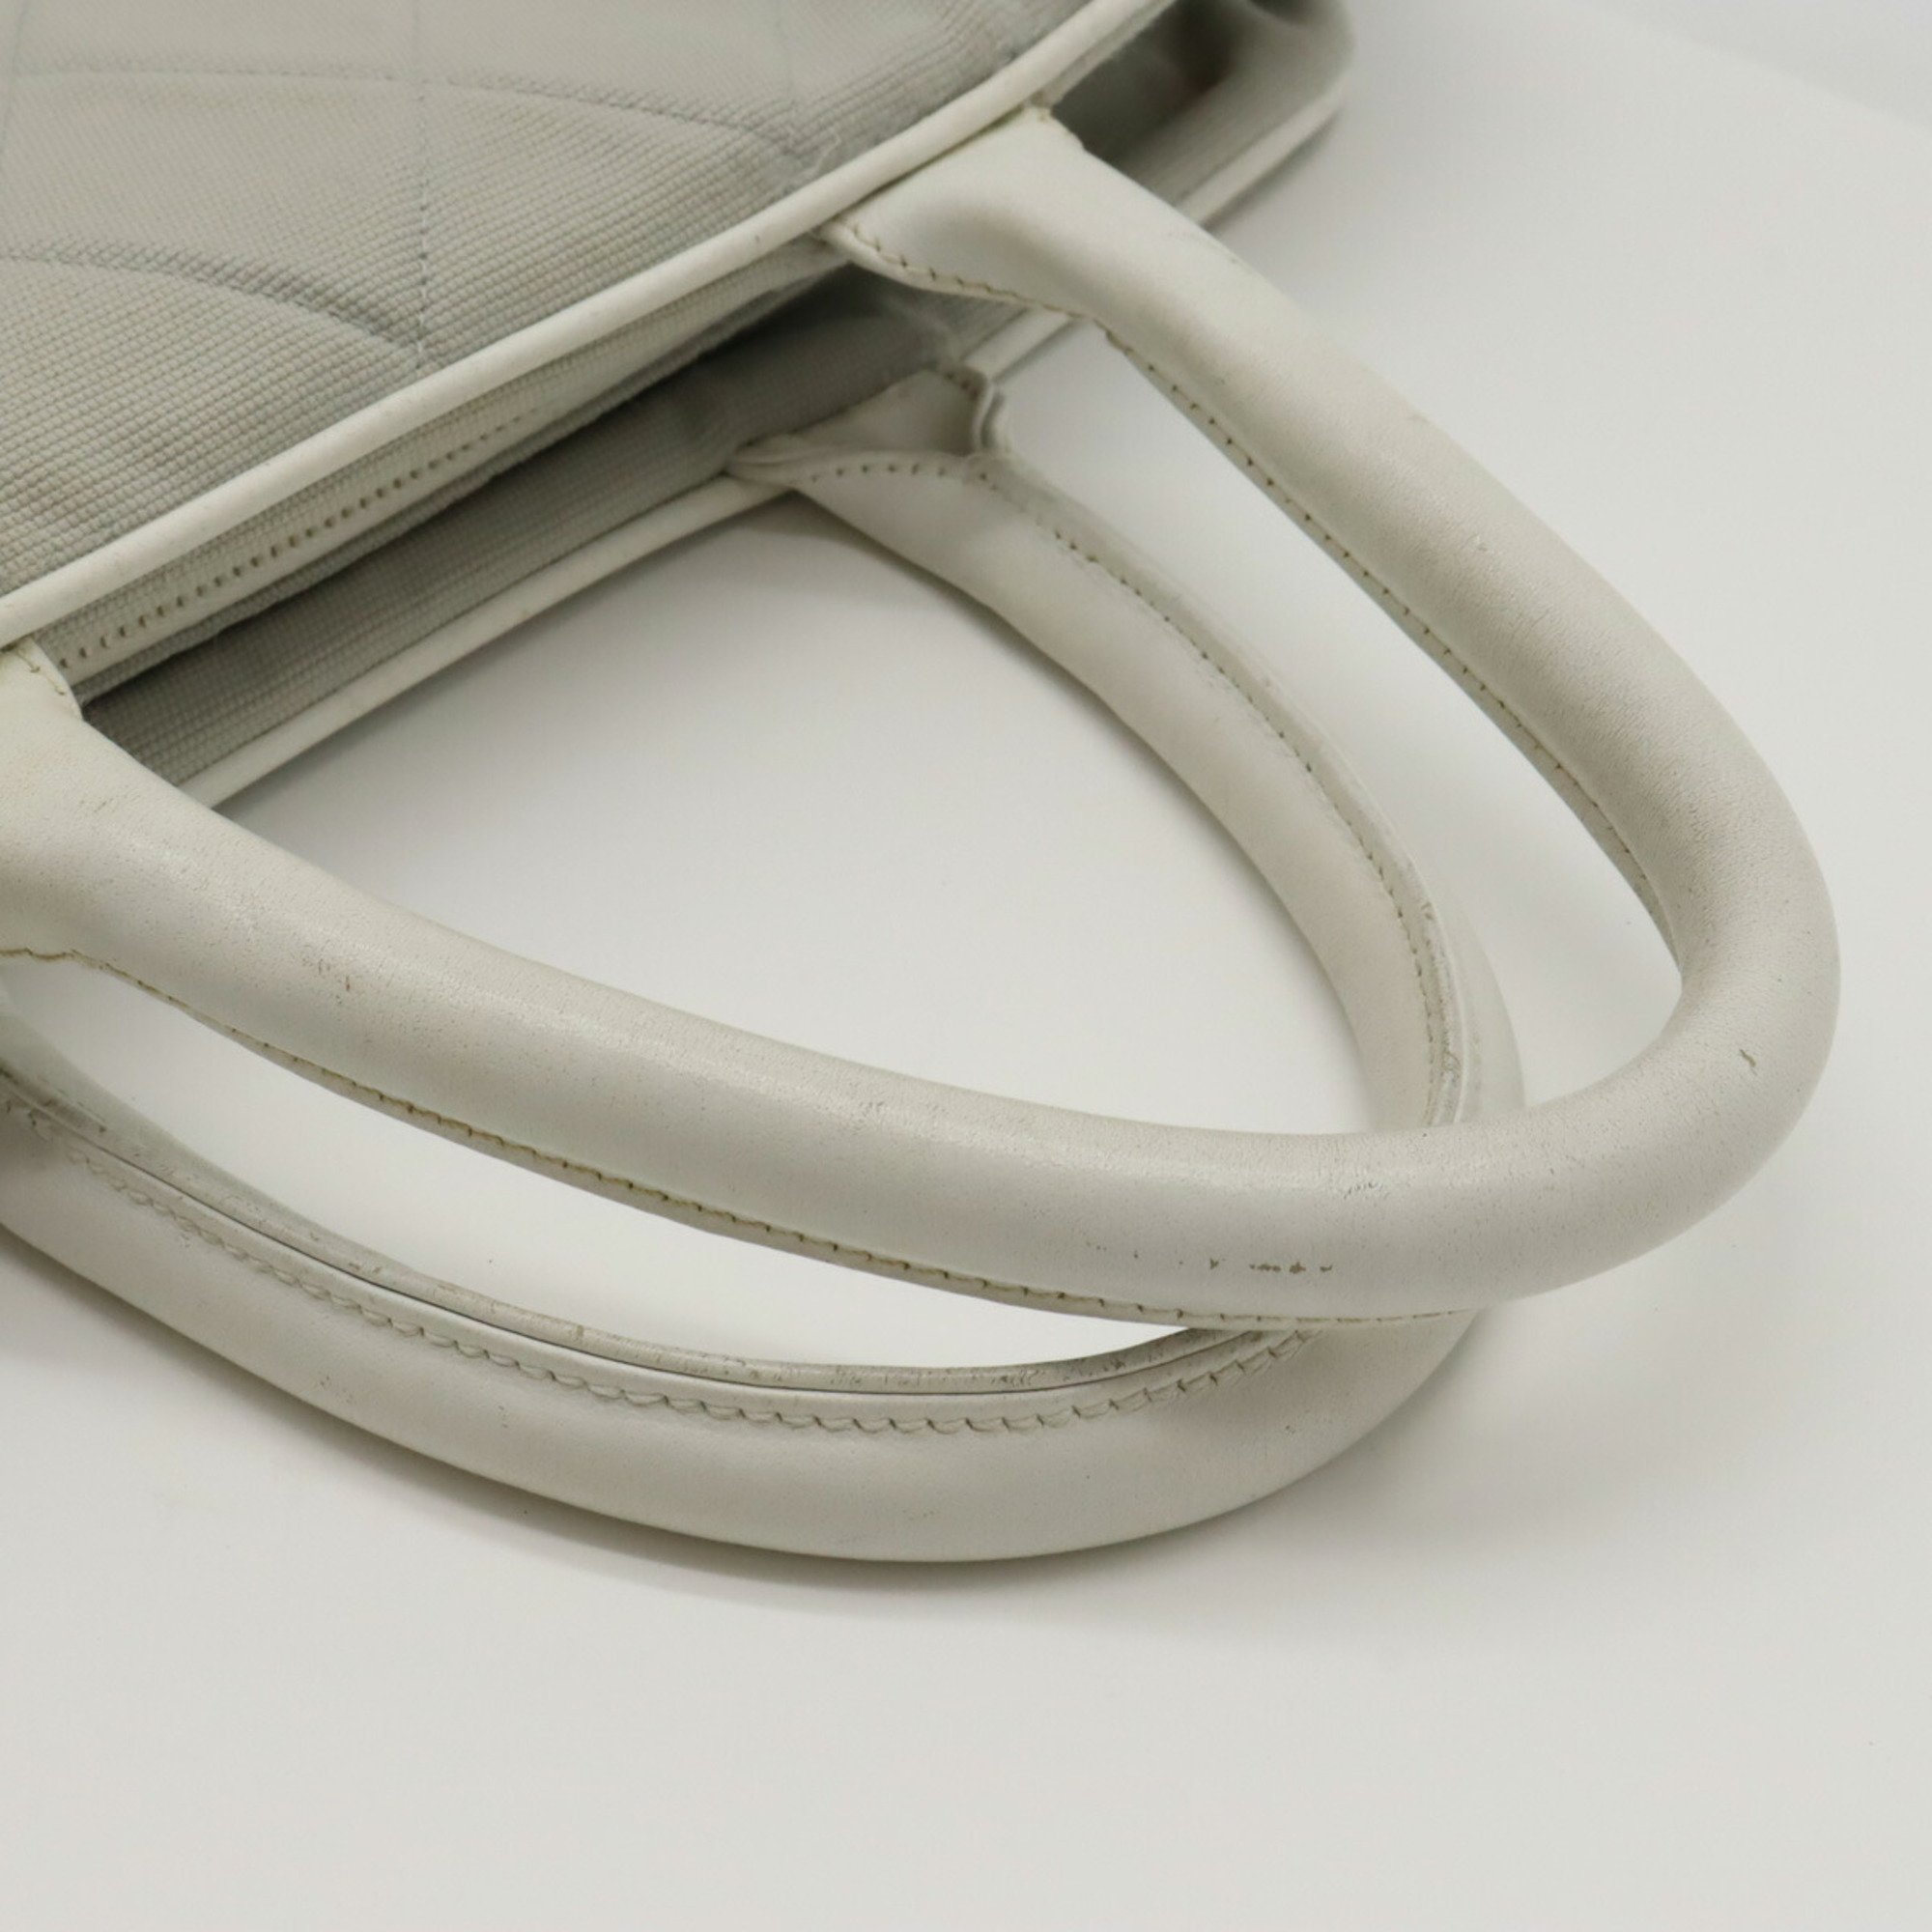 CHANEL Chanel Sport Line Matelasse Handbag Boston Bag Canvas Leather Light Gray White A15457